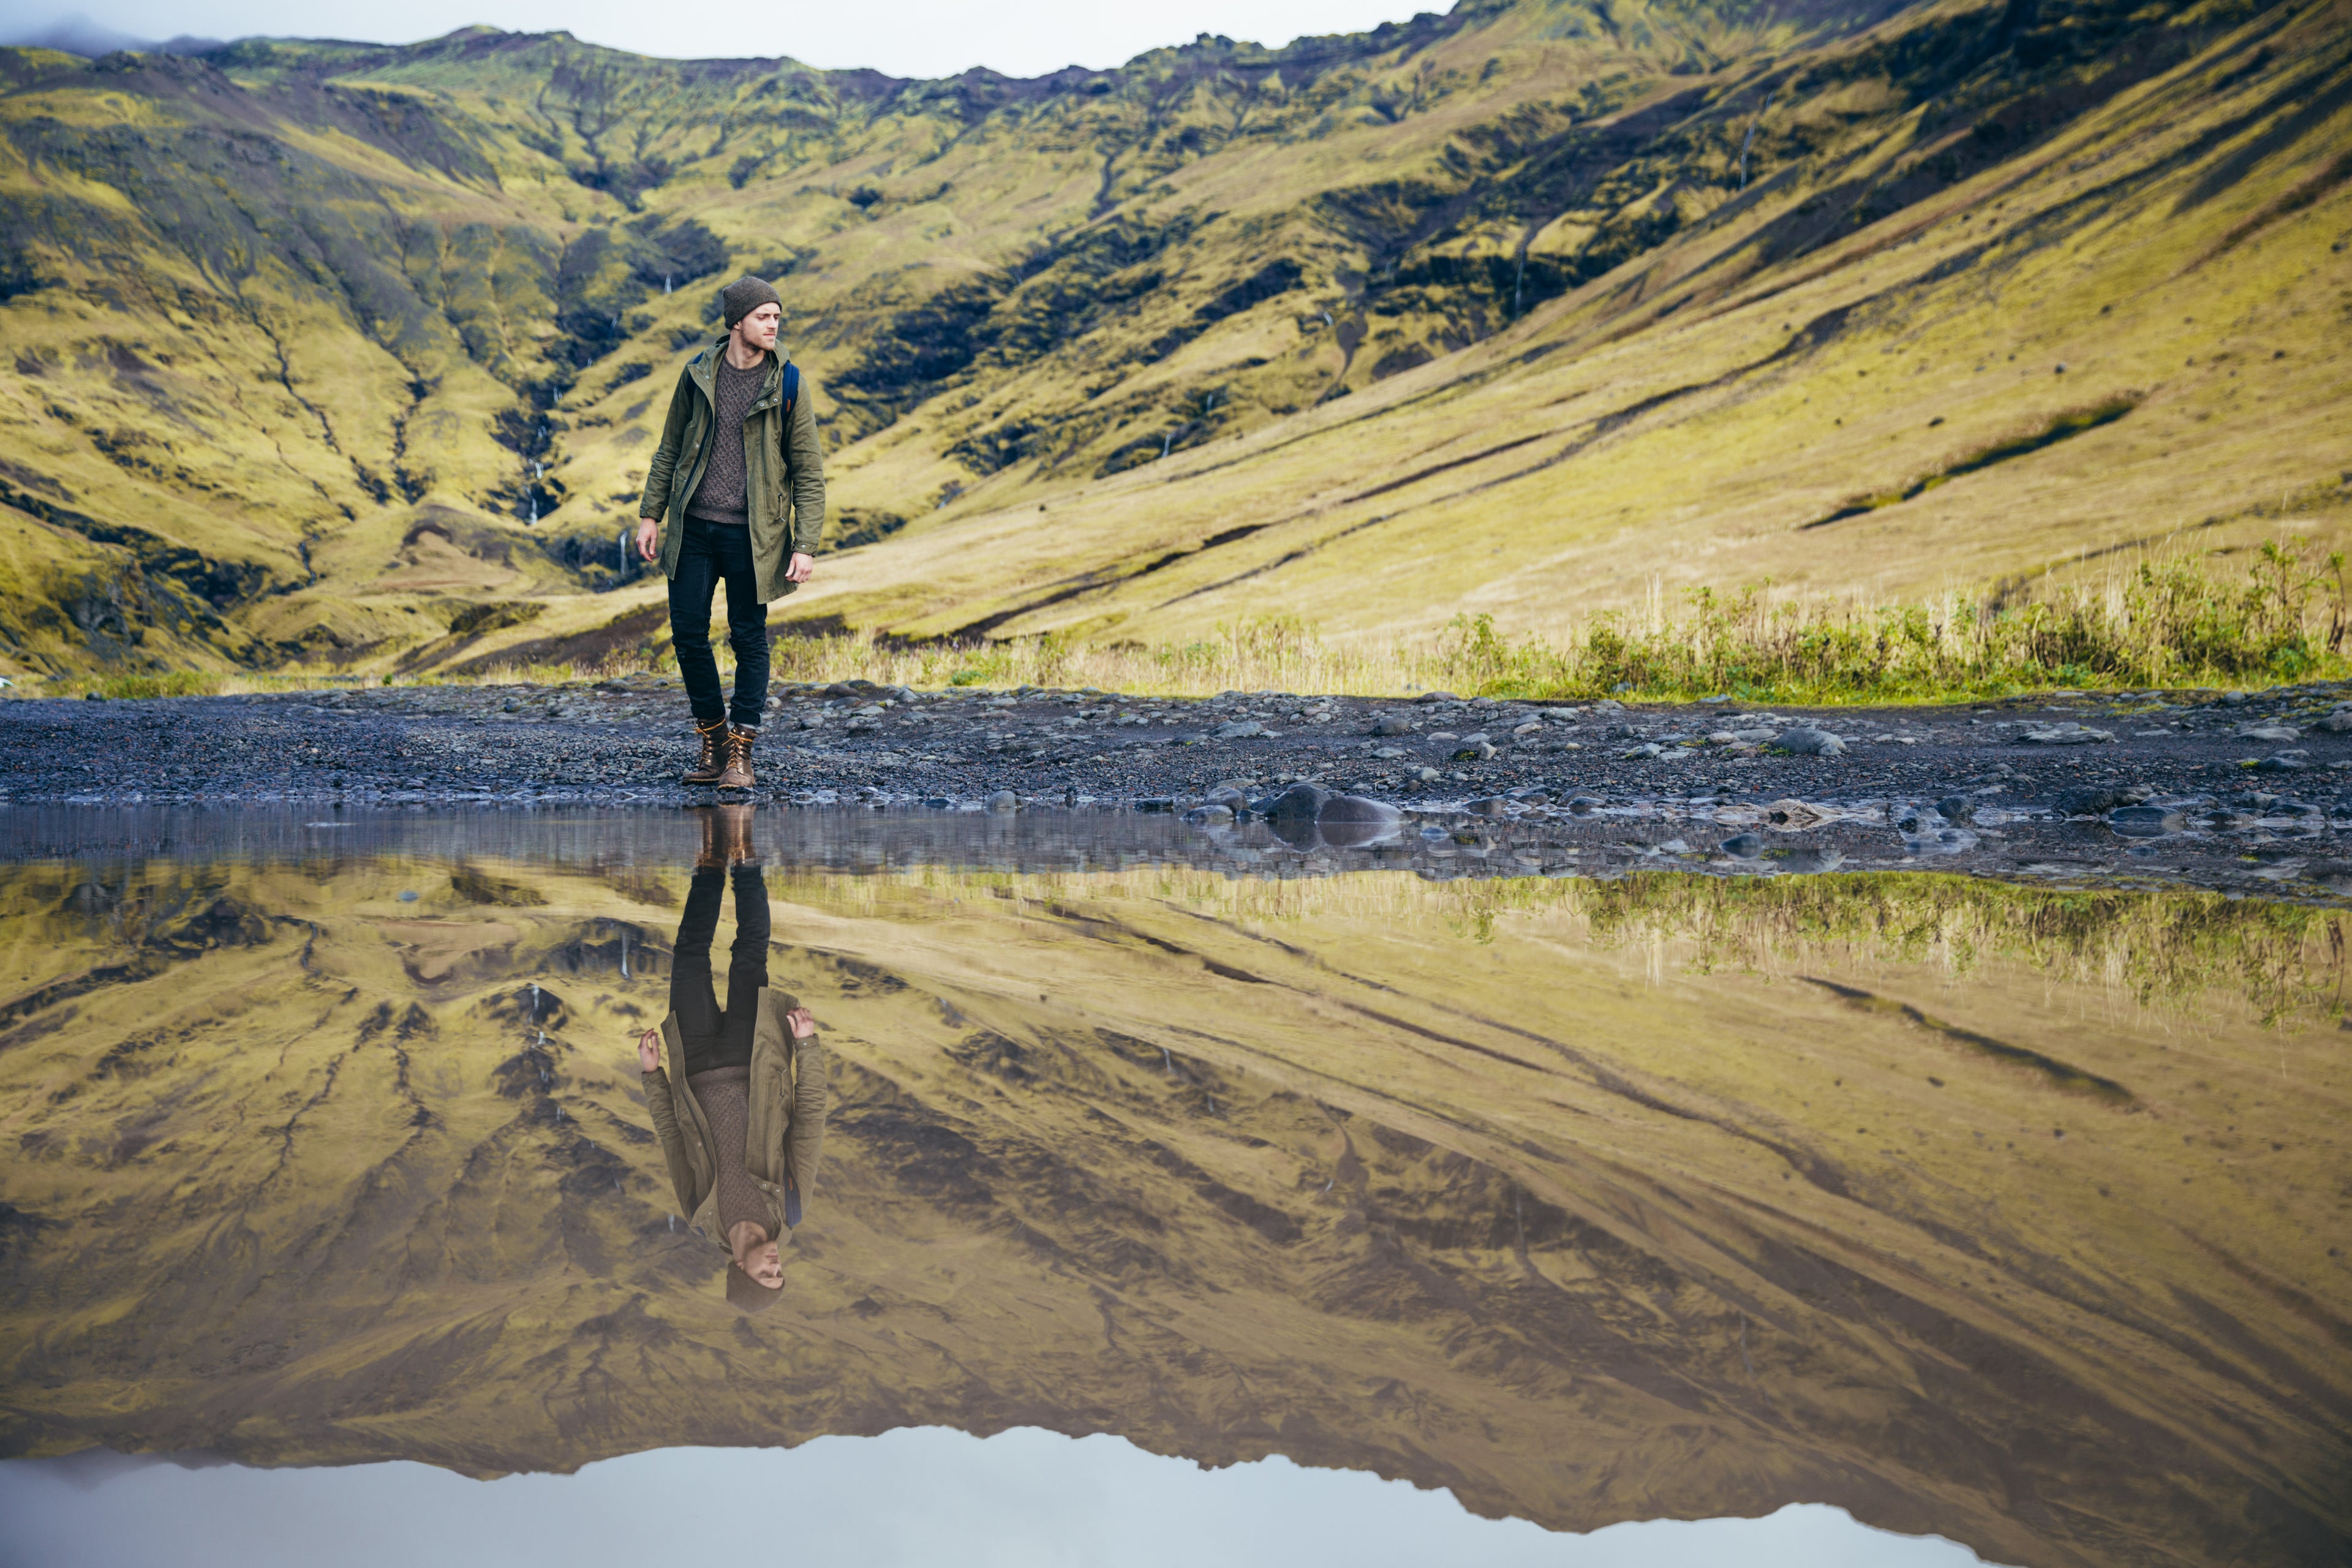 Man's reflection mirrored in mountain lake